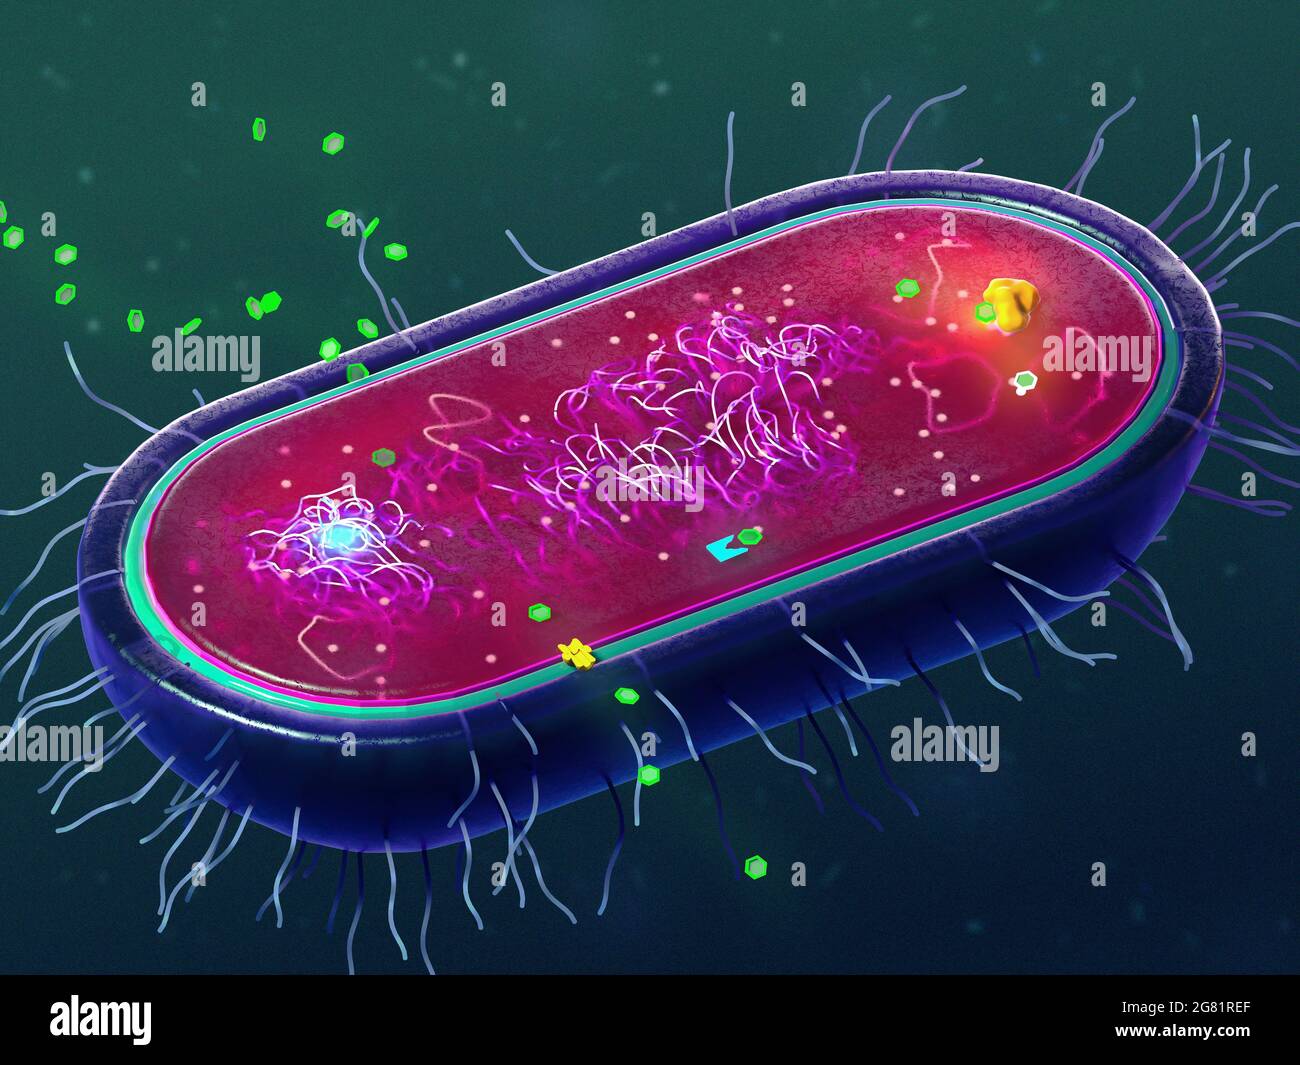 Antibiotic resistance mechanisms of bacteria, illustration Stock Photo